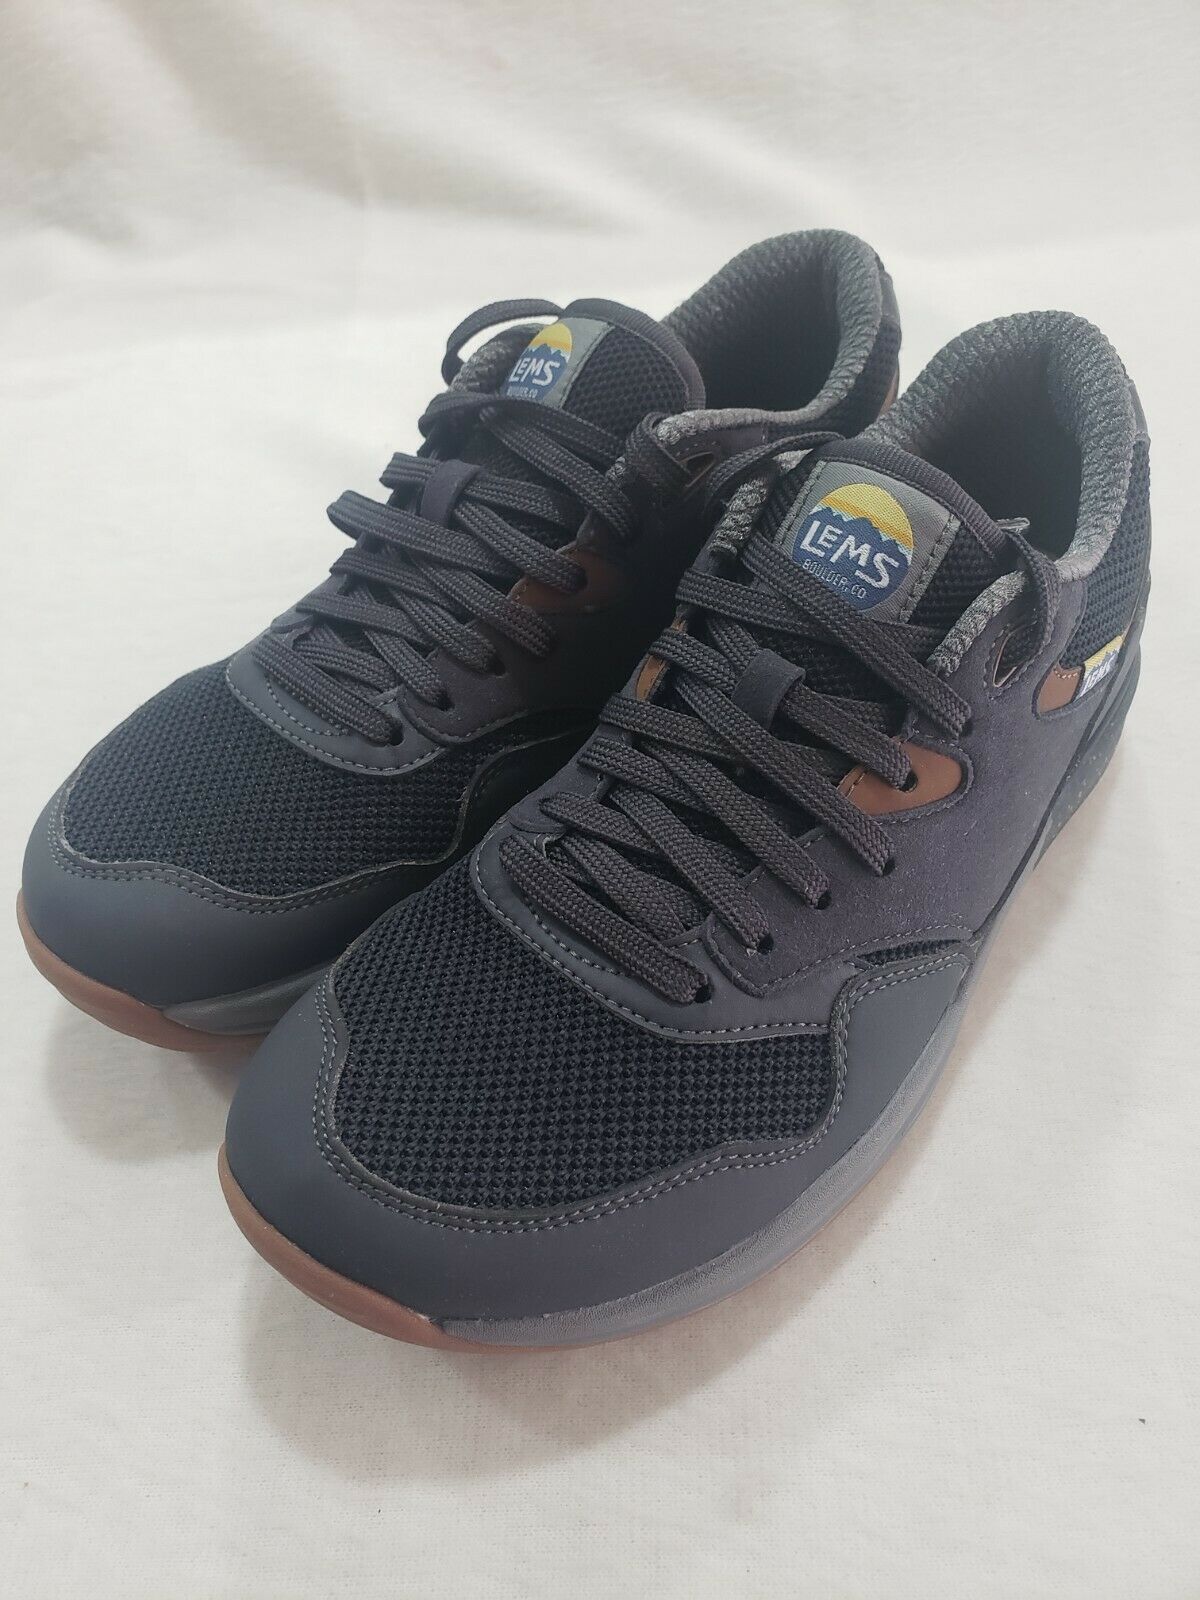 Lems Trailhead Huckberry Hiking Sneaker Shoes Men’s Size 8 D